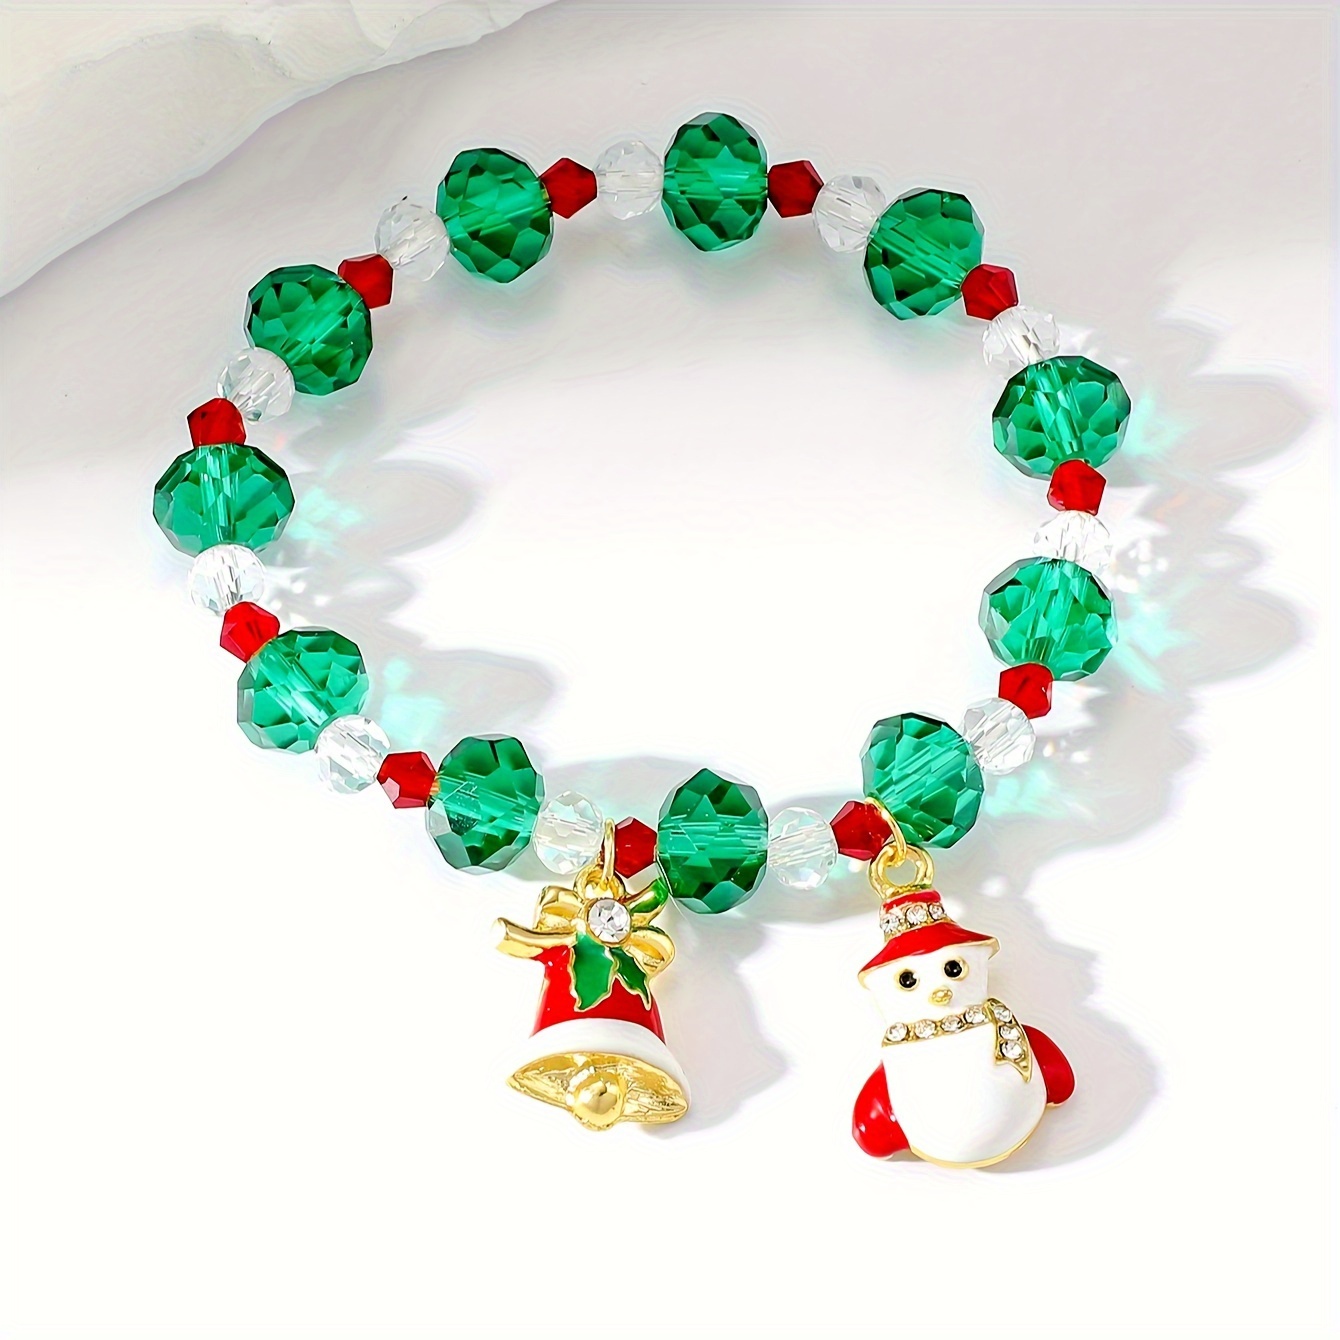 6/12pcs Christmas Bell Bracelet, Jingle Bell Bracelet, Adjustable Holiday Bell Bracelet, Christmas Stocking Filler, Fun Holiday Gift and Gift Bag